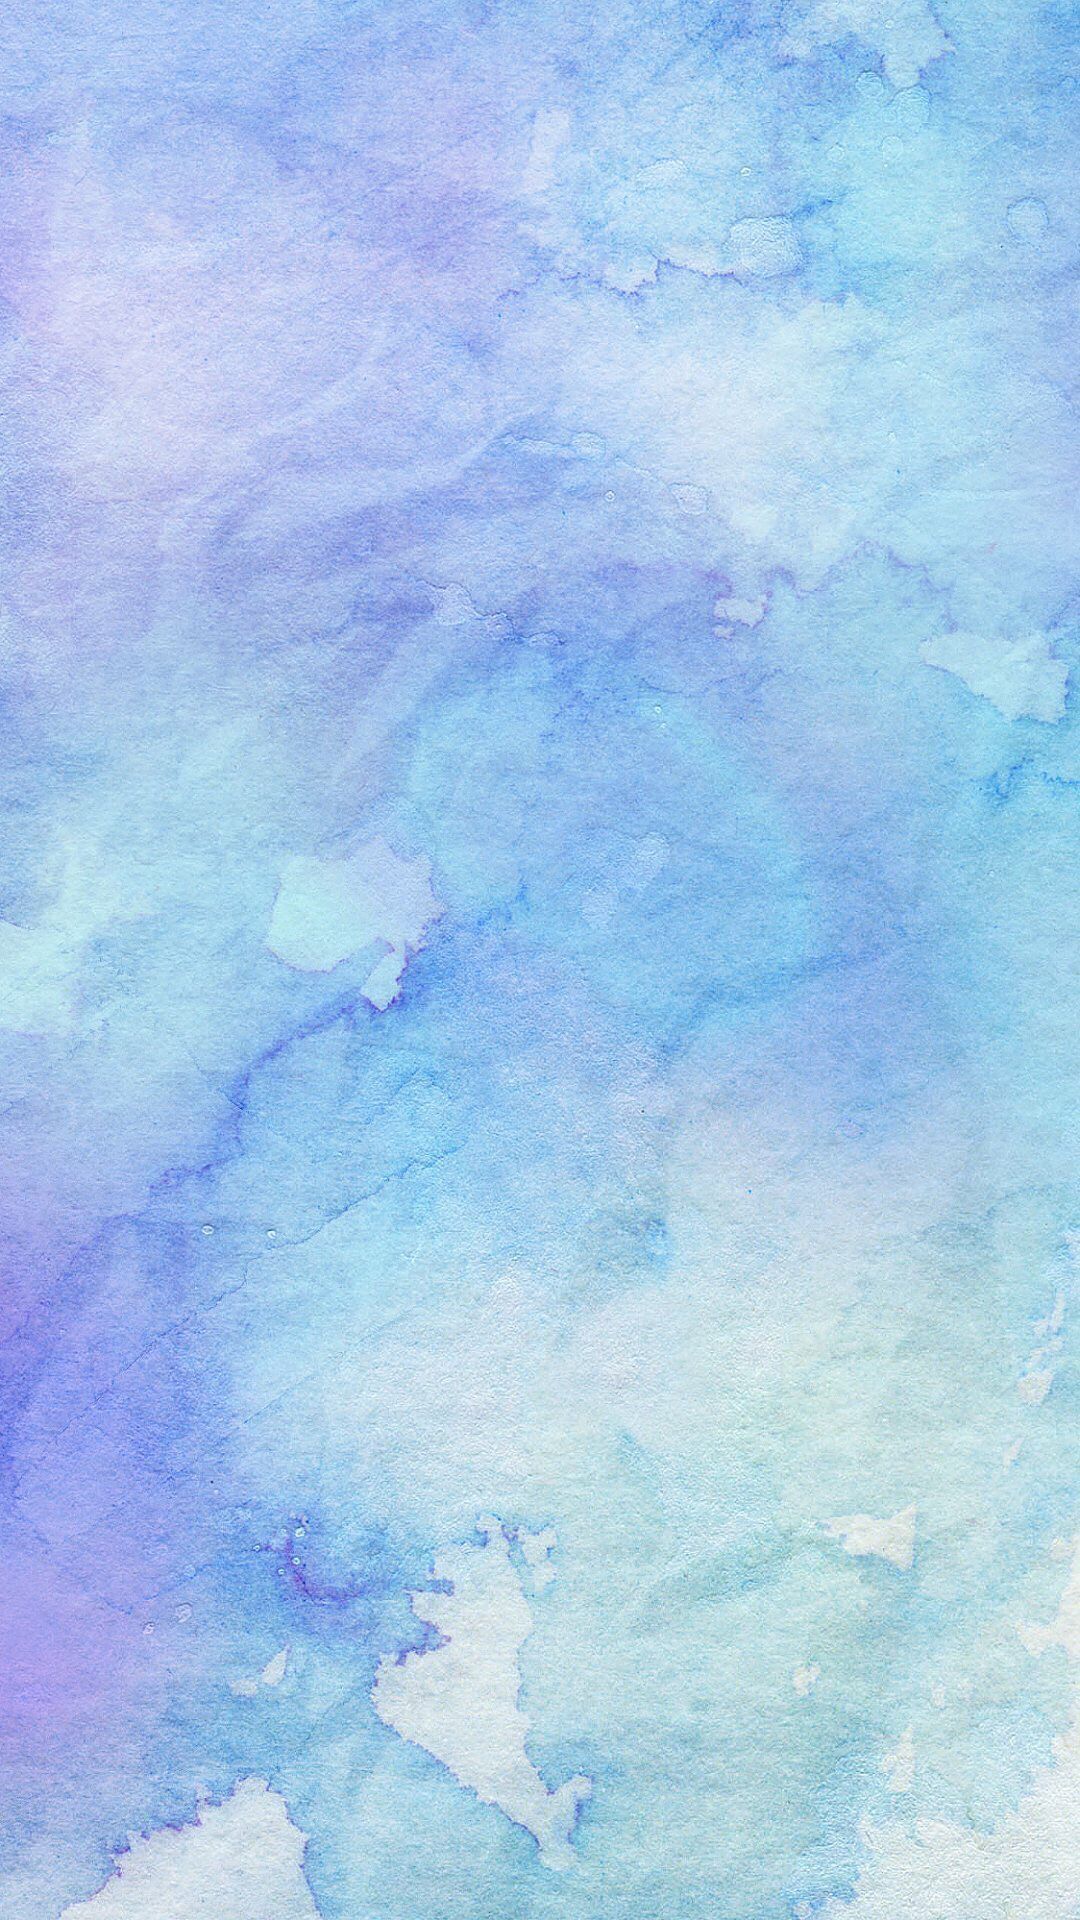 Pastel Blue Pattern Wallpaper Download. Watercolor wallpaper, Blue wallpaper iphone, Watercolor blue background